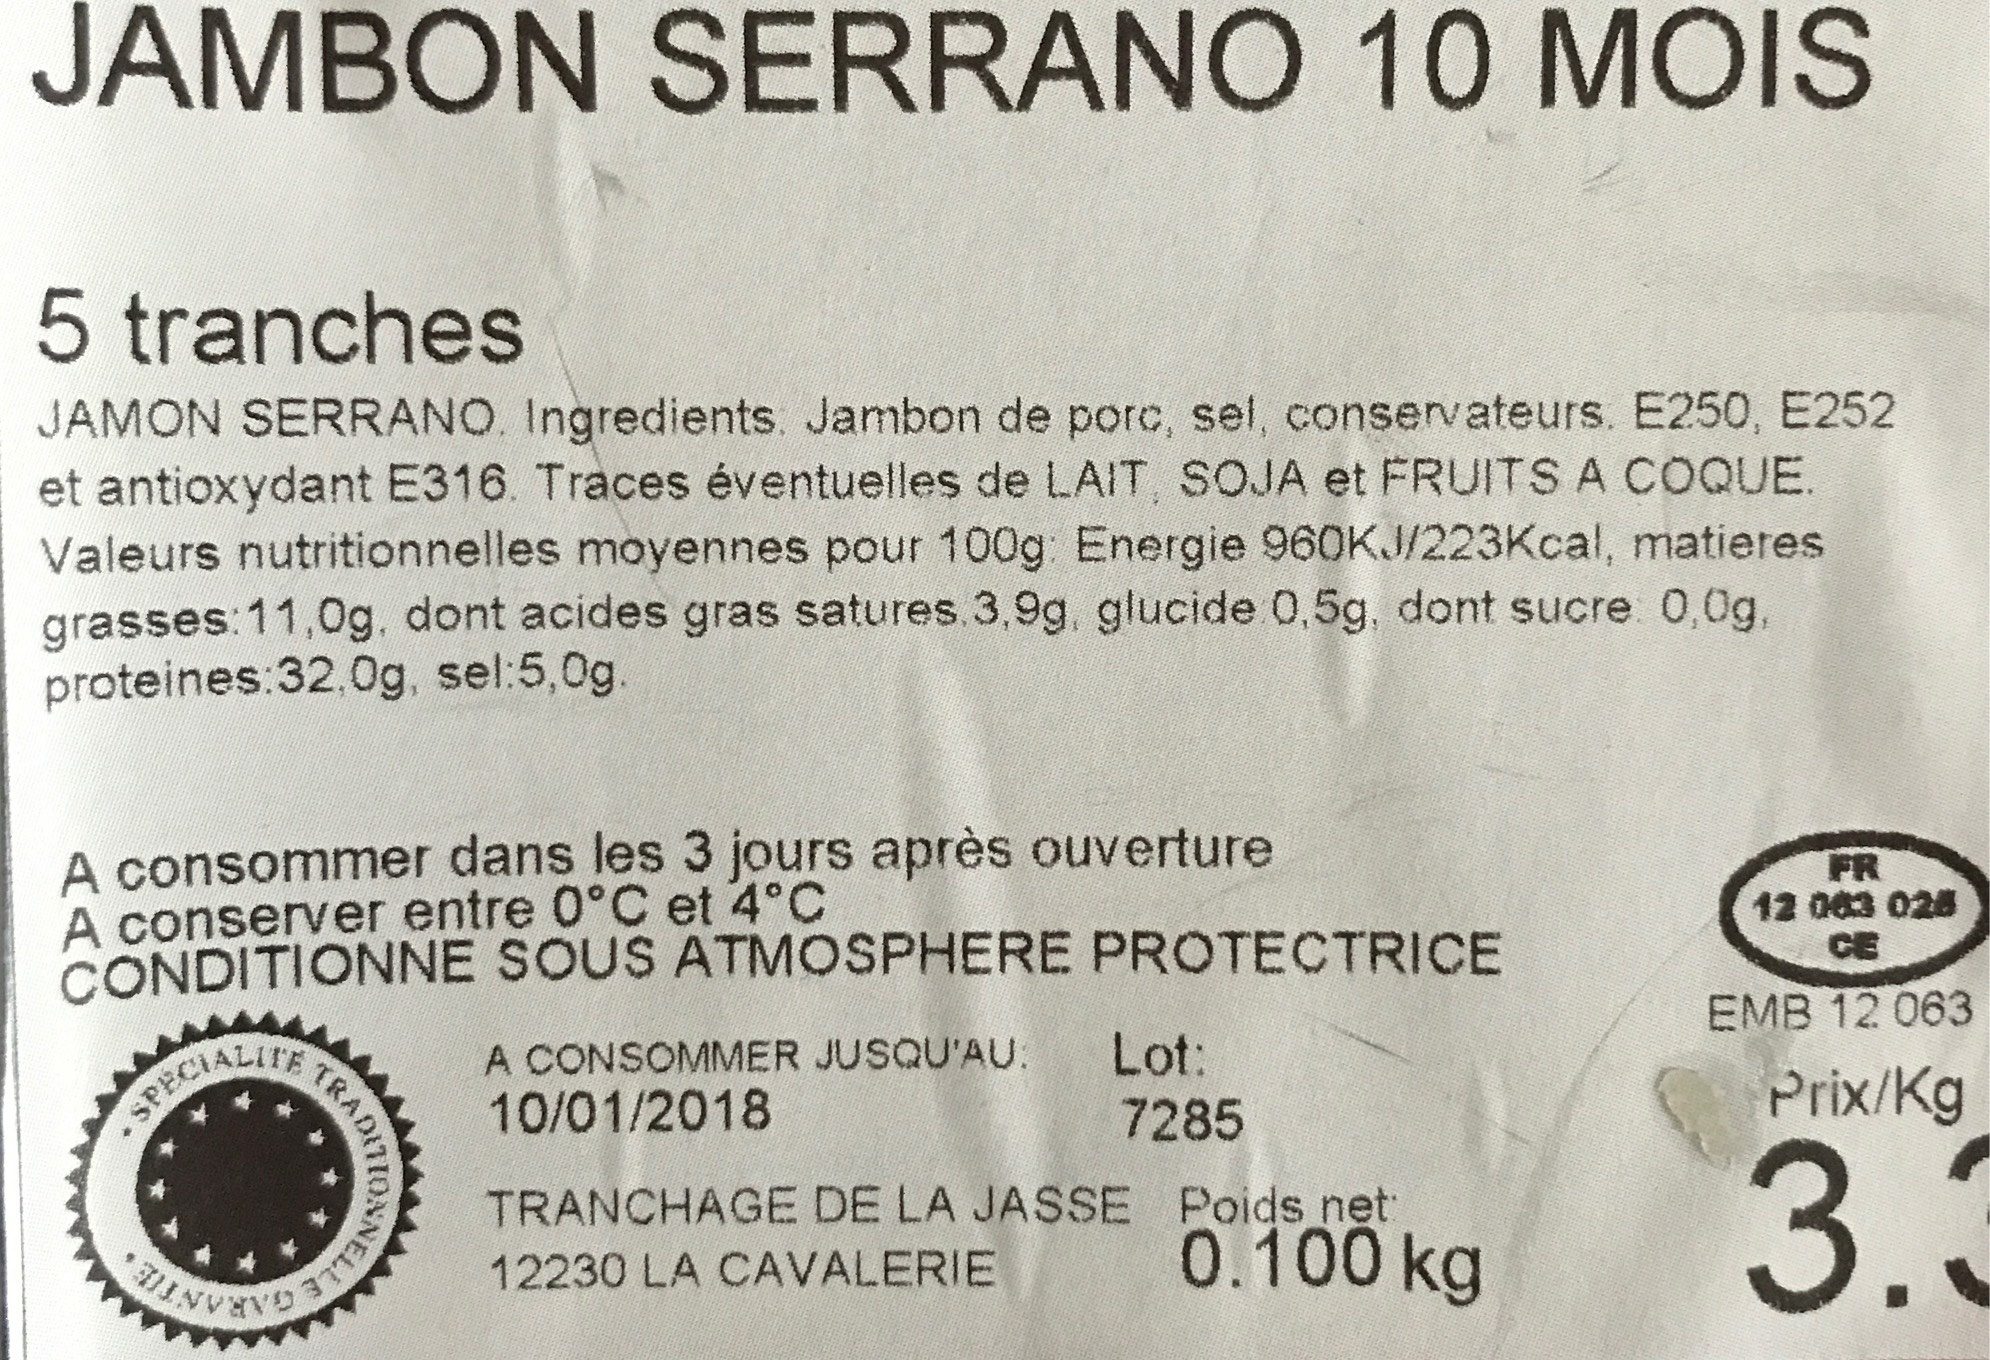 Jambon Serrano 10 mois - Nutrition facts - fr